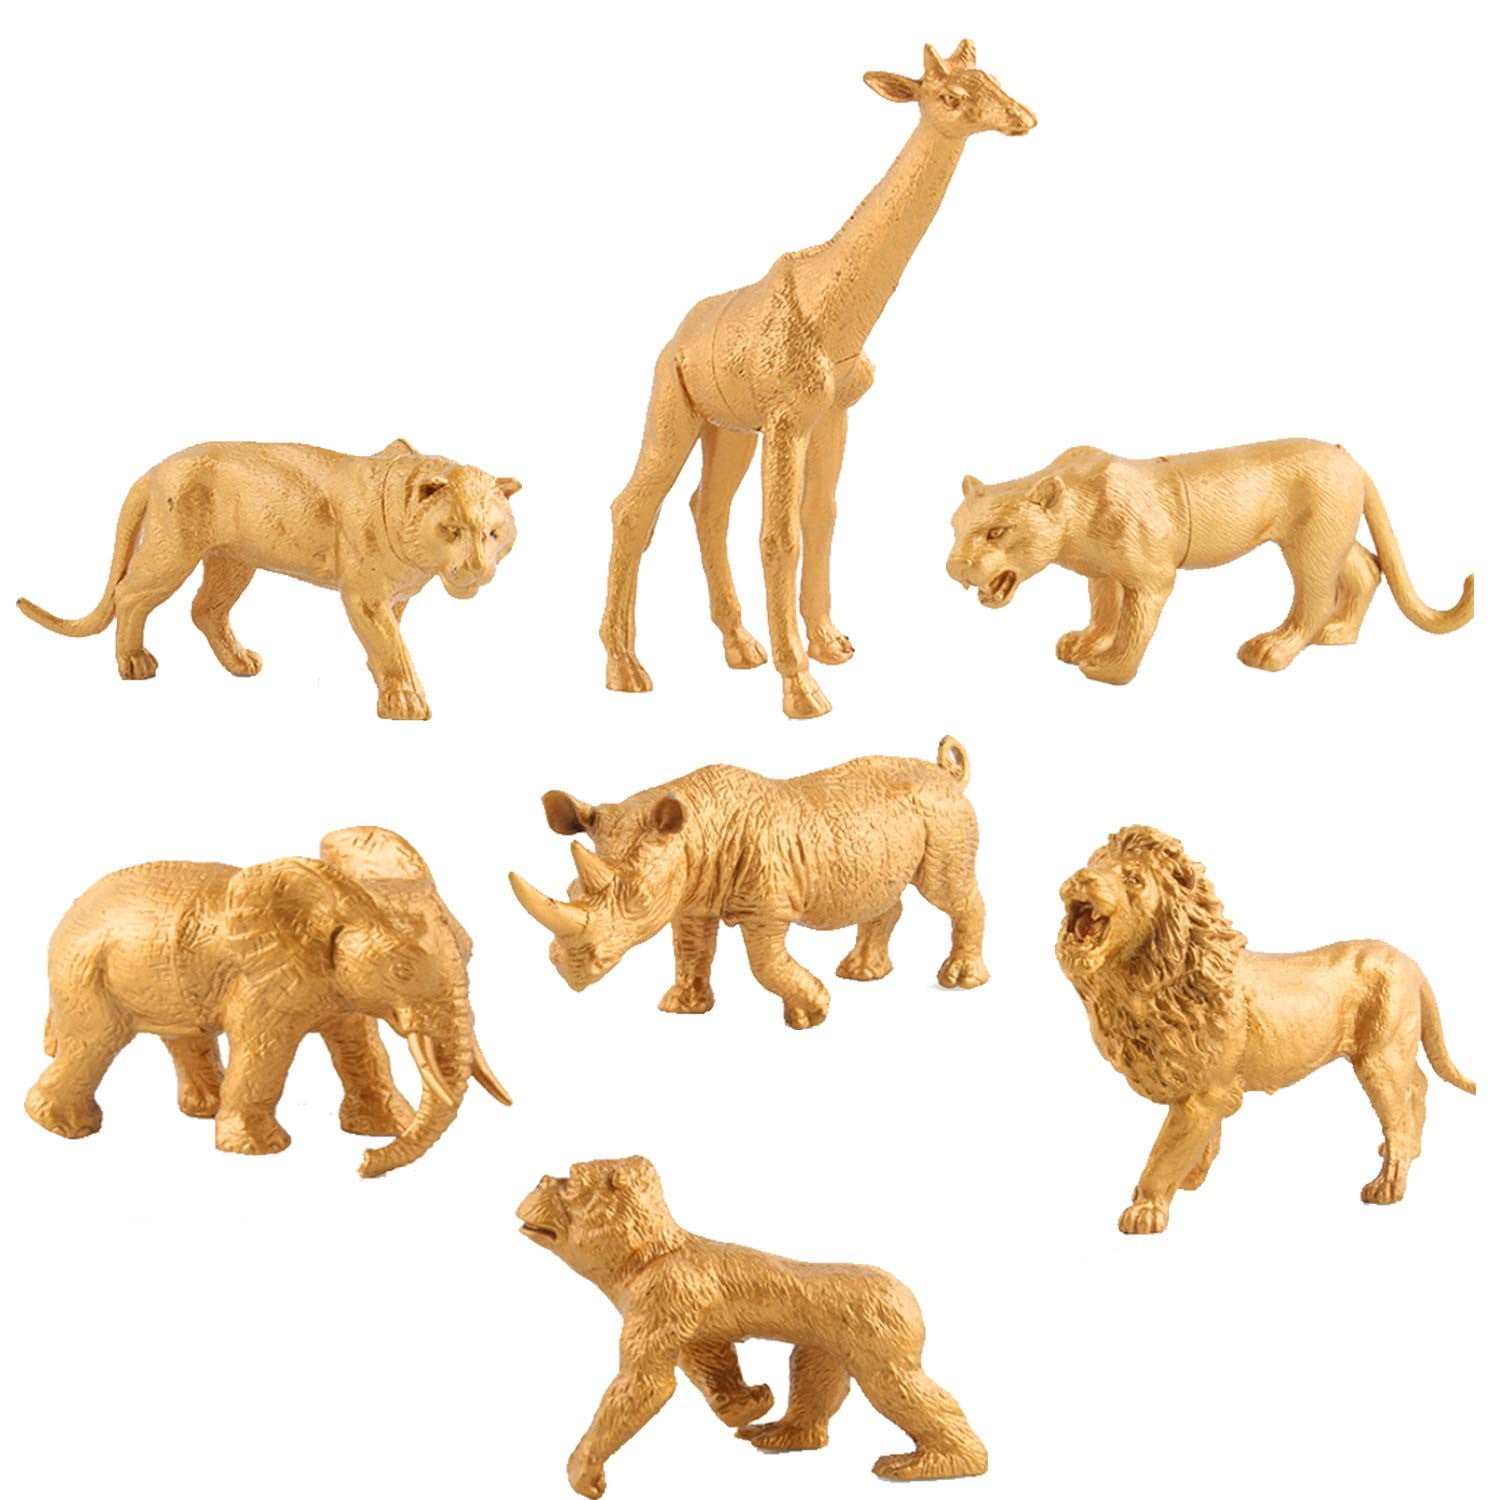 Metallic Gold Plastic Animal Figurines Toys, 7PCS Jumbo Safari Zoo Animal  Figures, Jungle Wild Animals with Elephant, Lion, Giraffe for Baby Shower  Decor, Safari Themed Birthday Party 